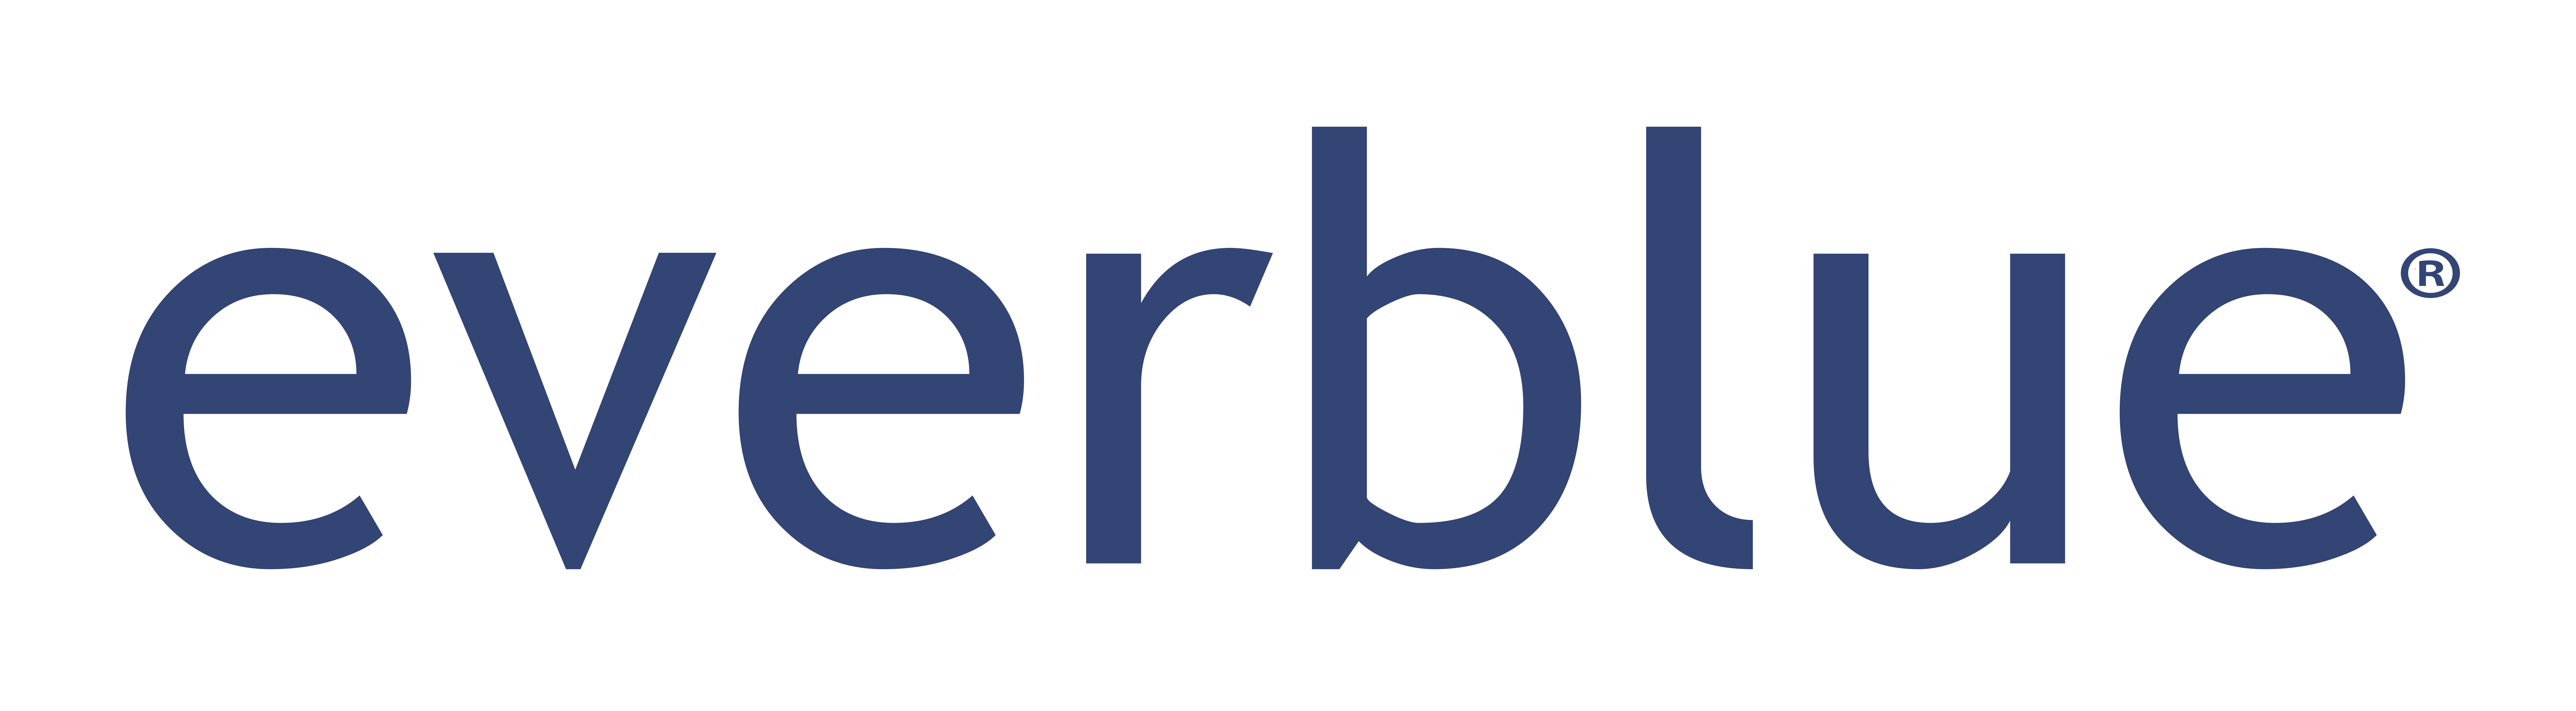 Everblue, A Division of IADT - Chicago company logo